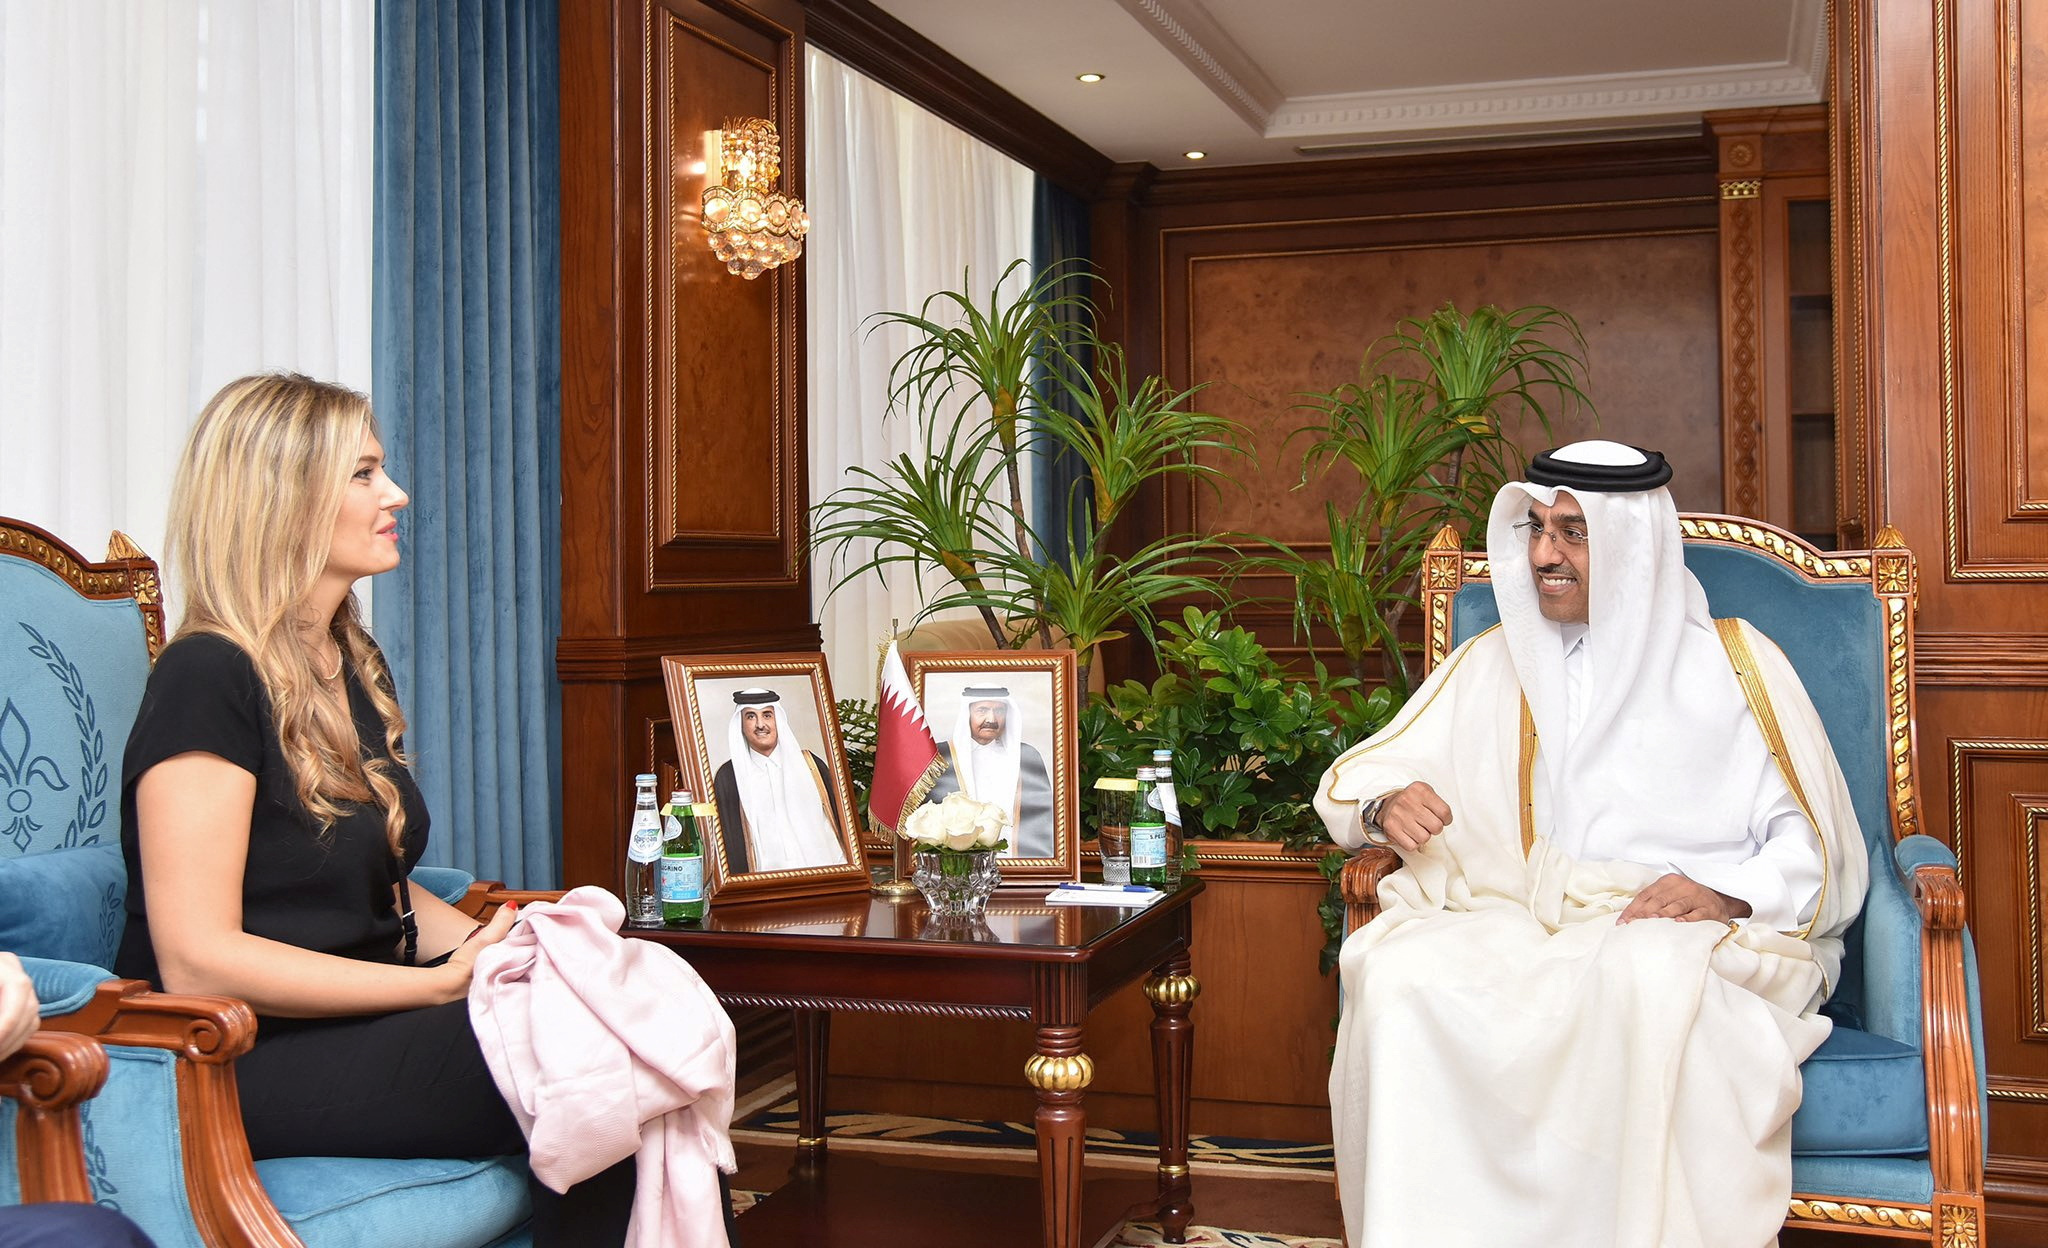 Al Marri, Minister of Labor of Qatar, meets Kaili, Vice-President of the European Parliament, during a meeting in Qatar